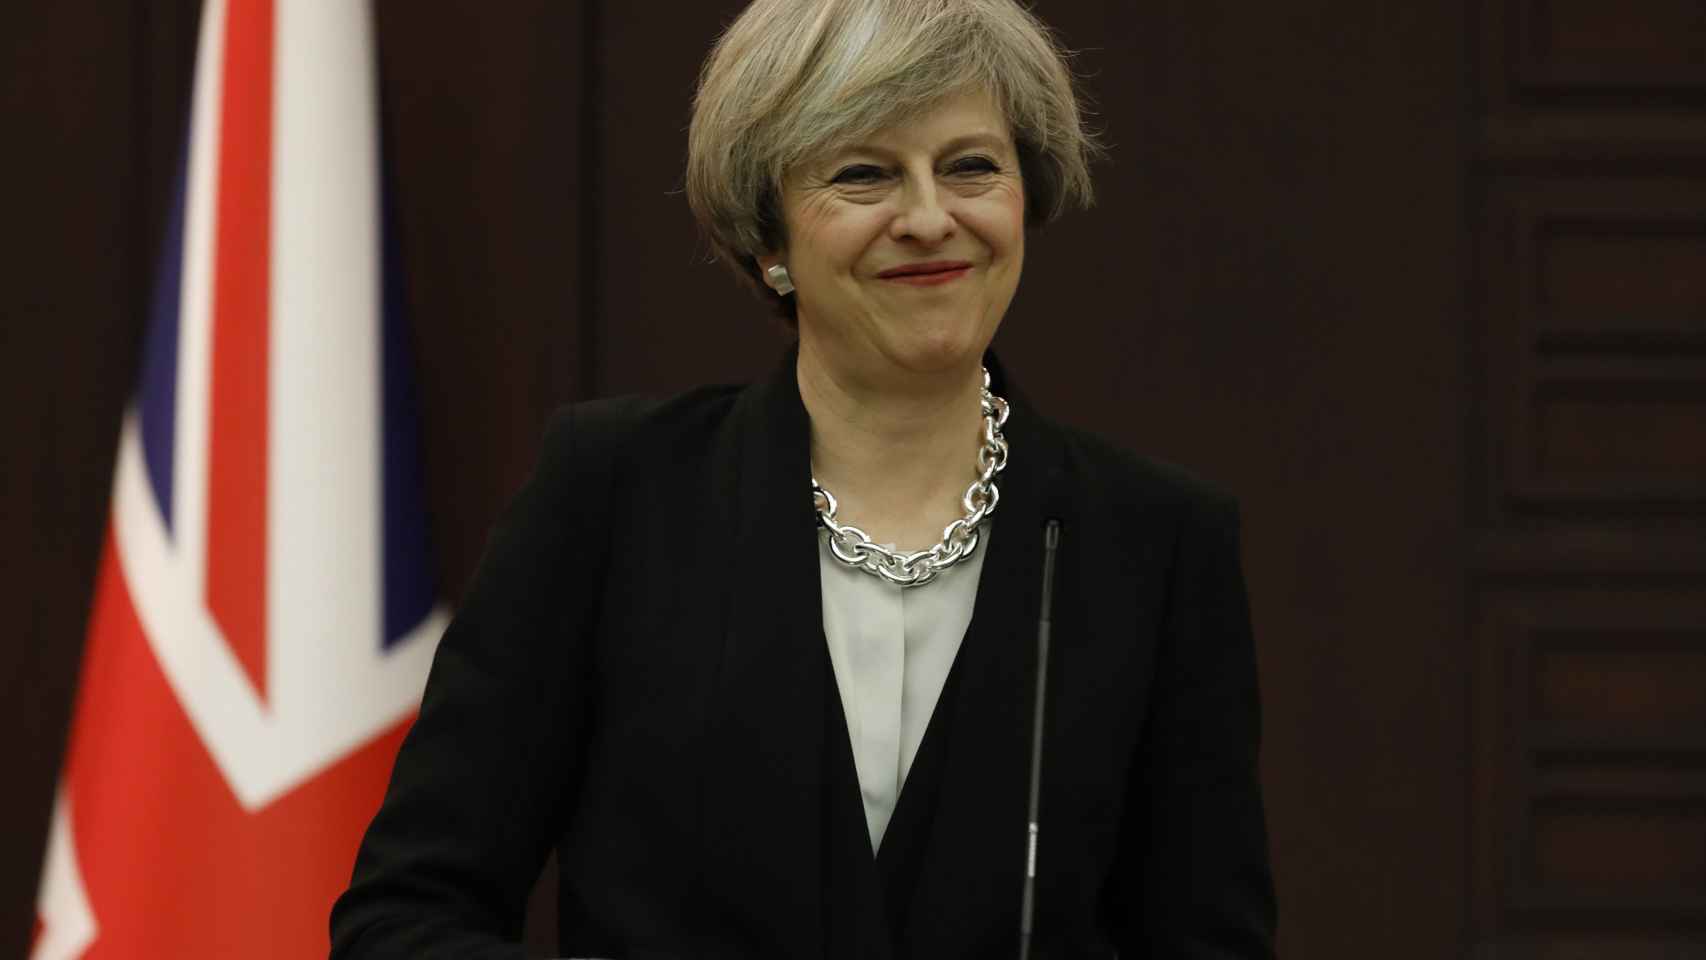 La 'premier' británica Theresa May.